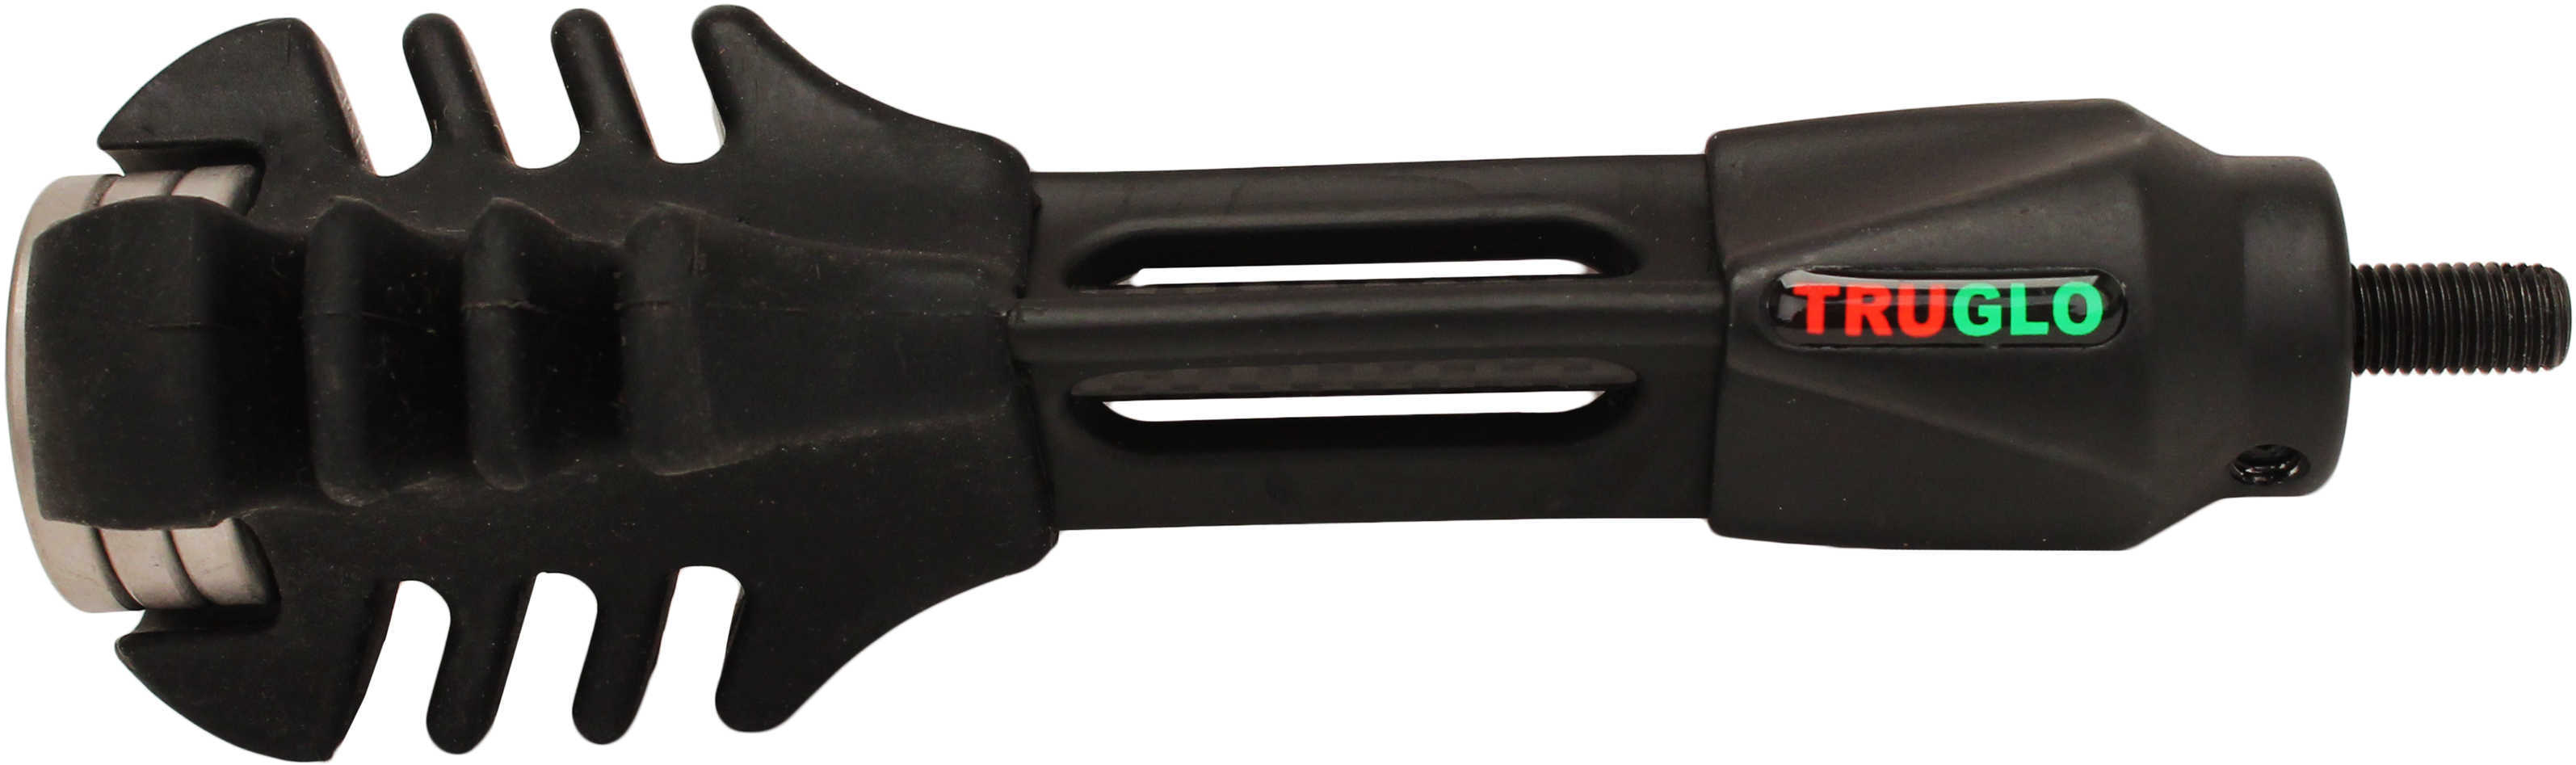 TruGlo Tru-Tec Carbon Pro Stabilizer Black 6 in. Model: TG855B